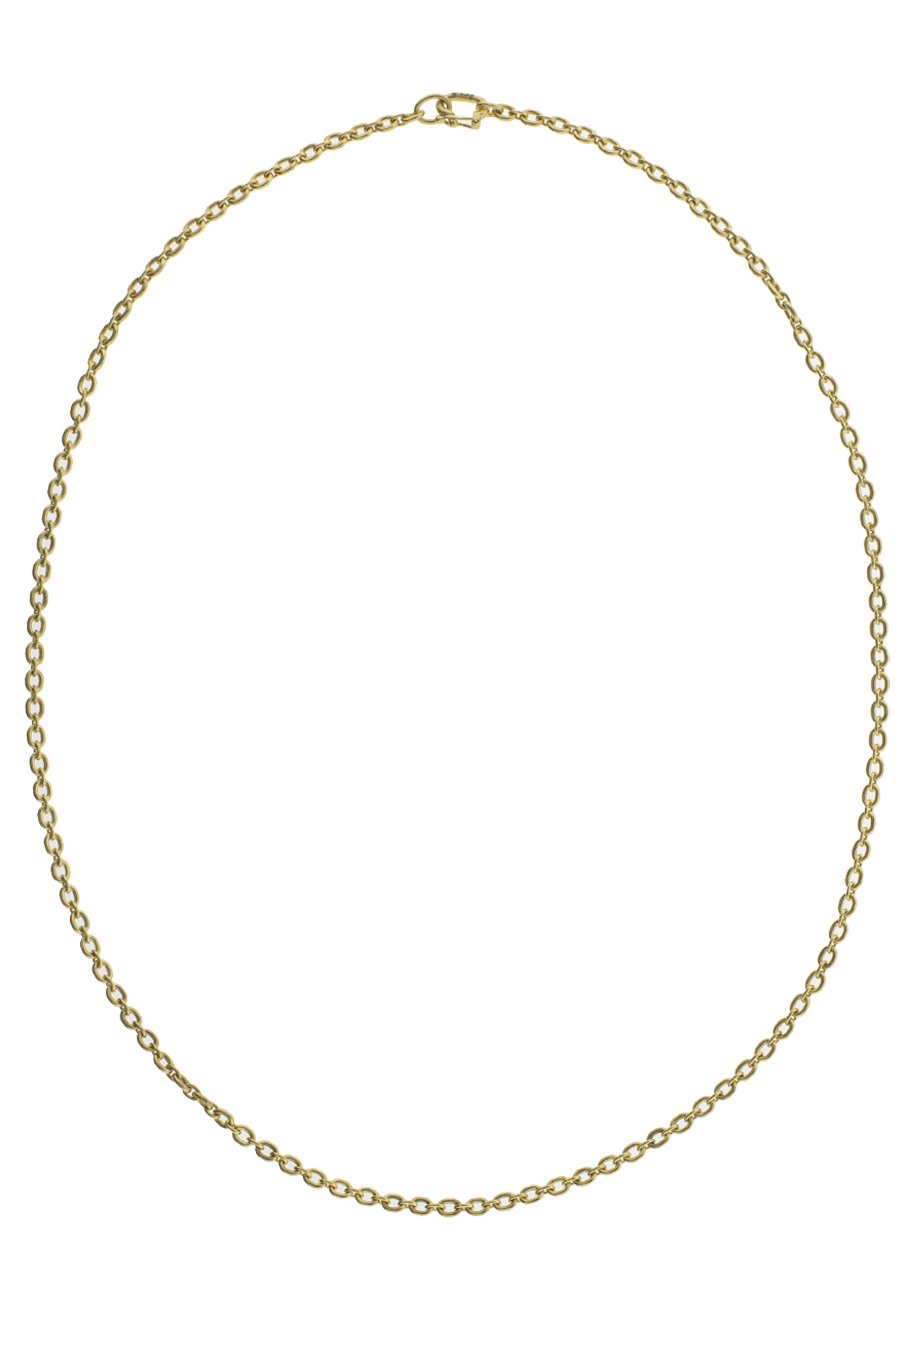 IRENE NEUWIRTH JEWELRY-Tiny Oval Link Chain-YELLOW GOLD